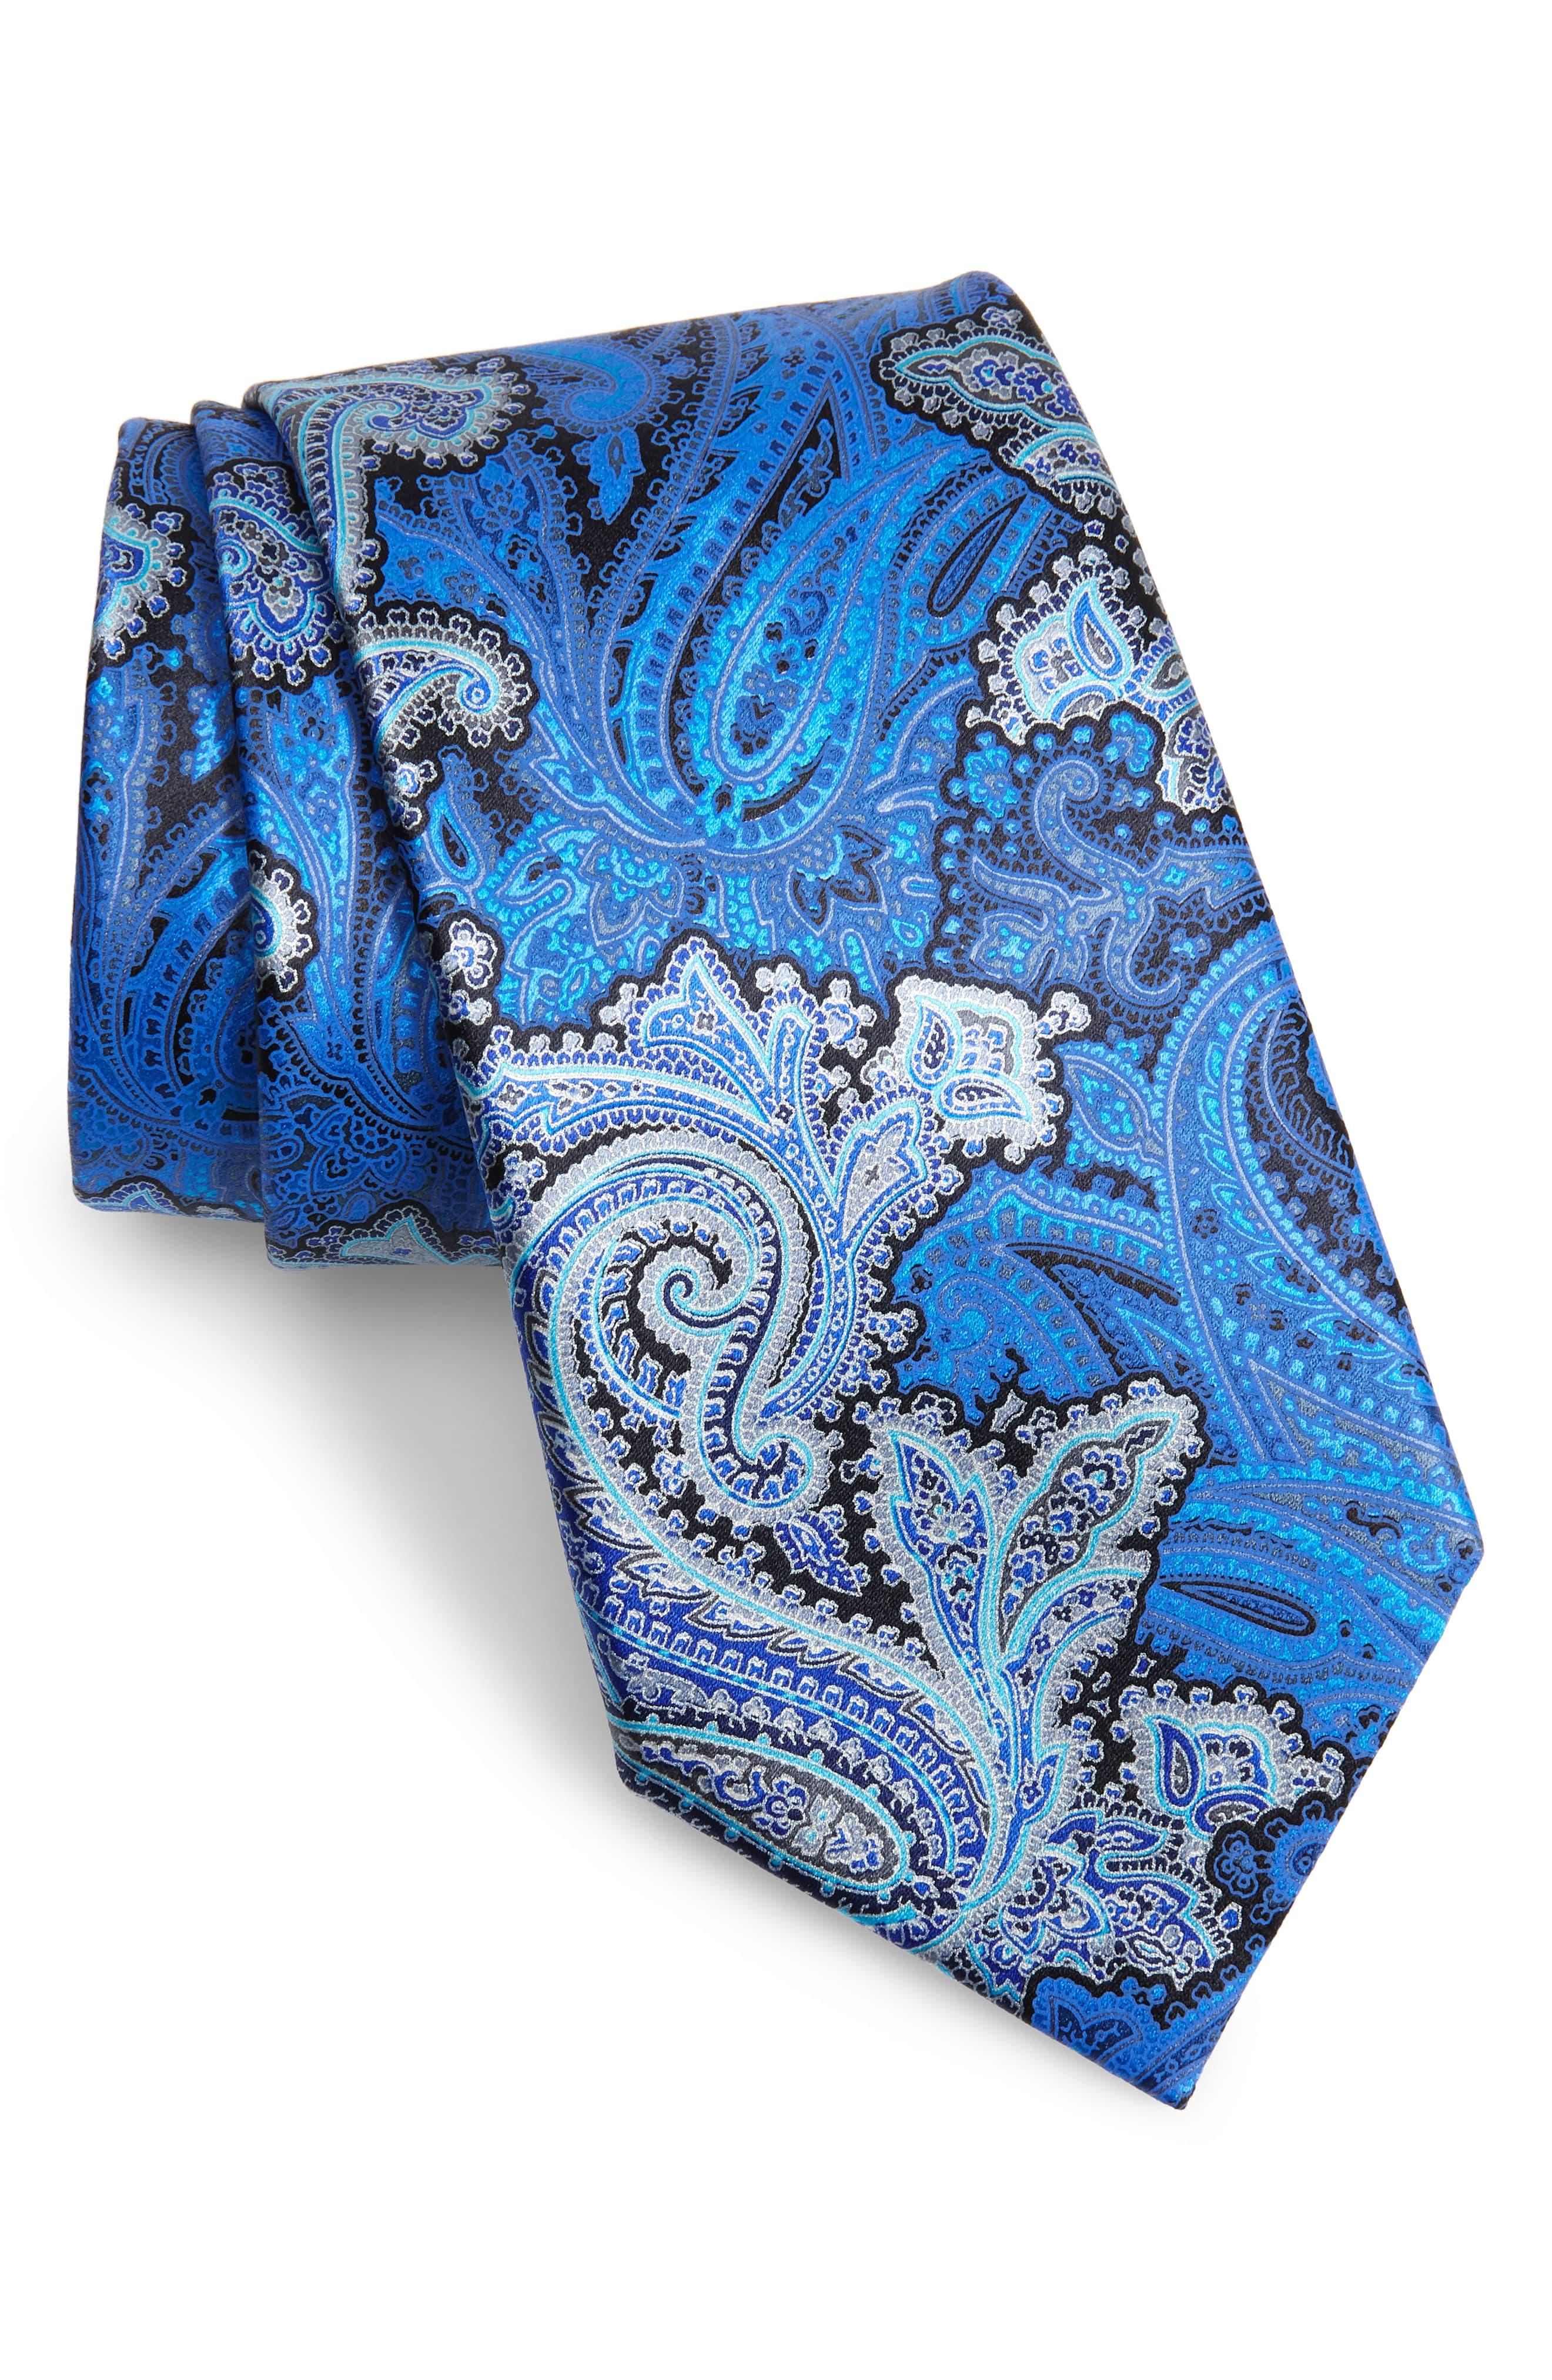 Ermenegildo Zegna Quindici Paisley Silk Tie in Navy (Blue) for Men - Lyst